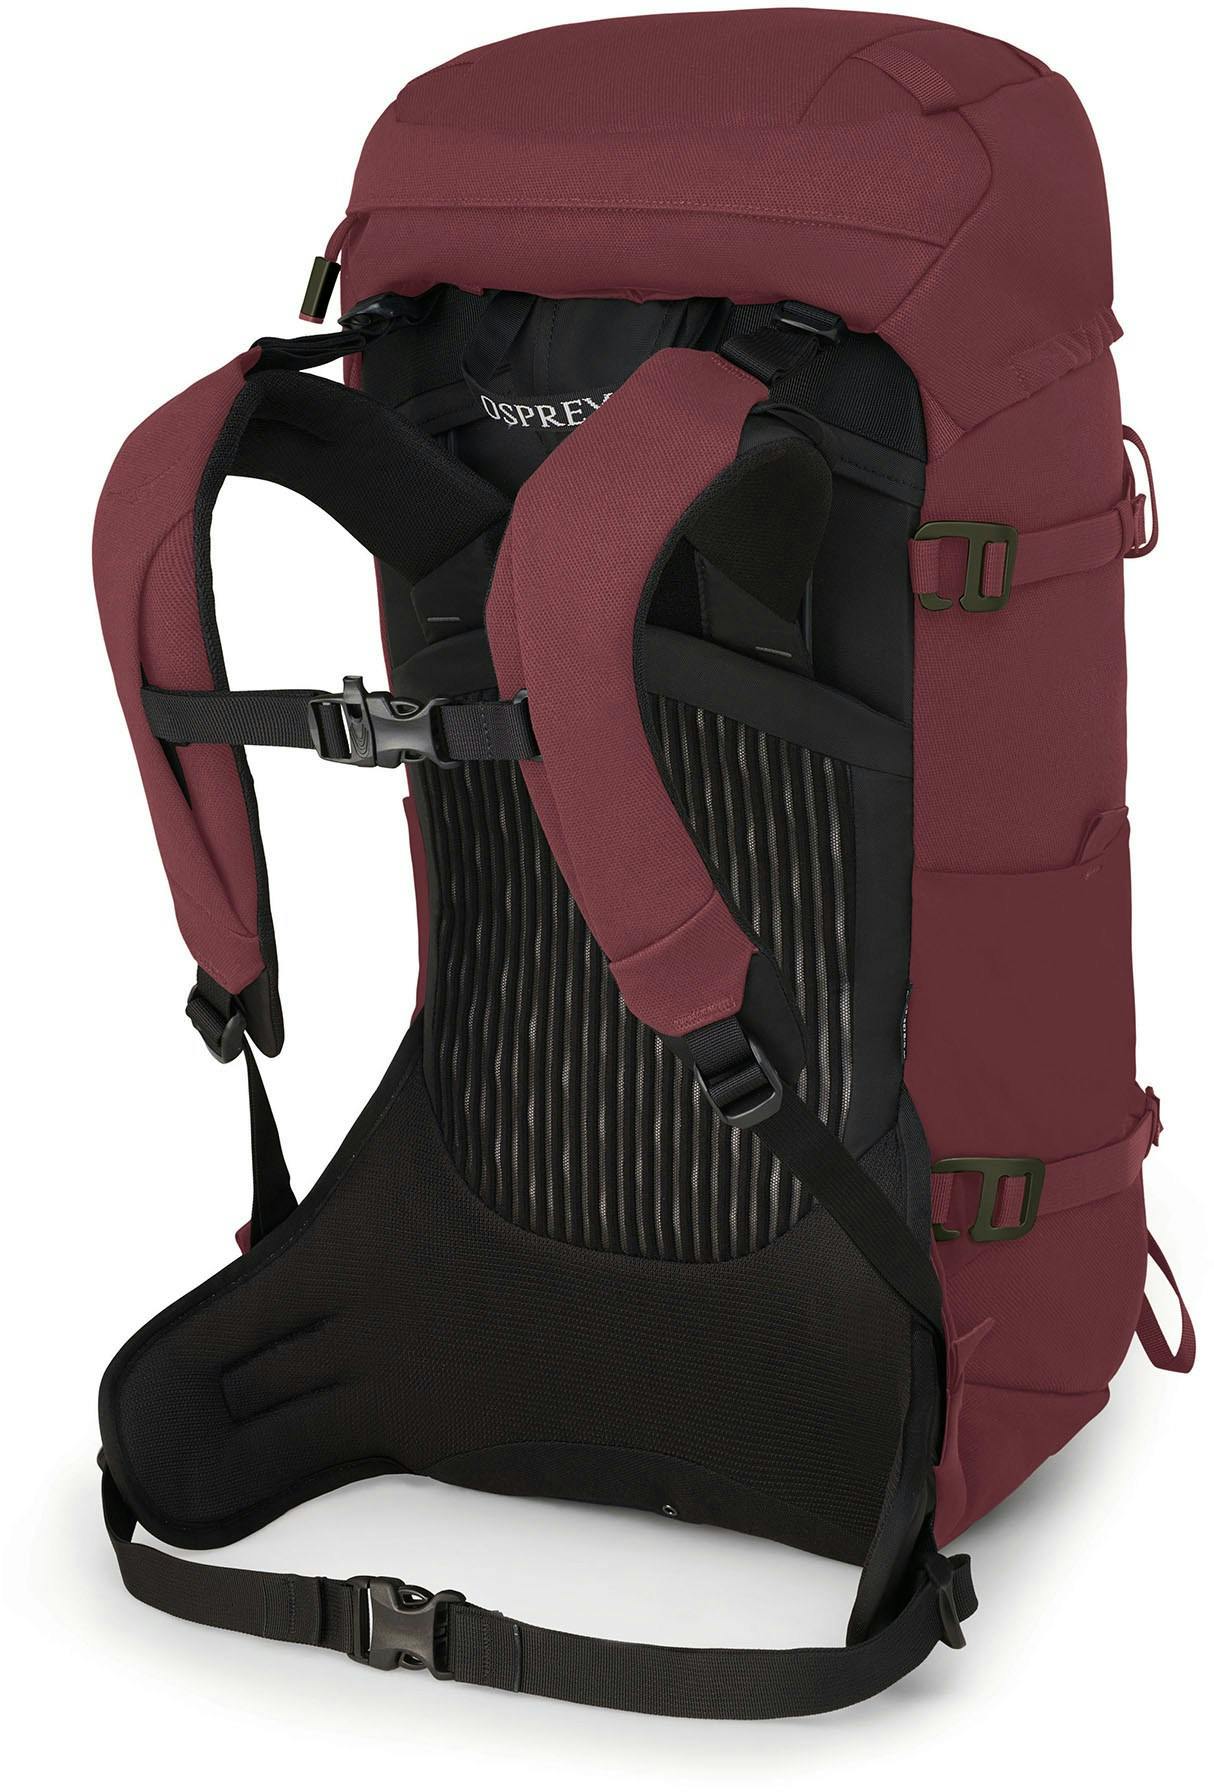 Osprey Archeon 30 Backpack- Women's